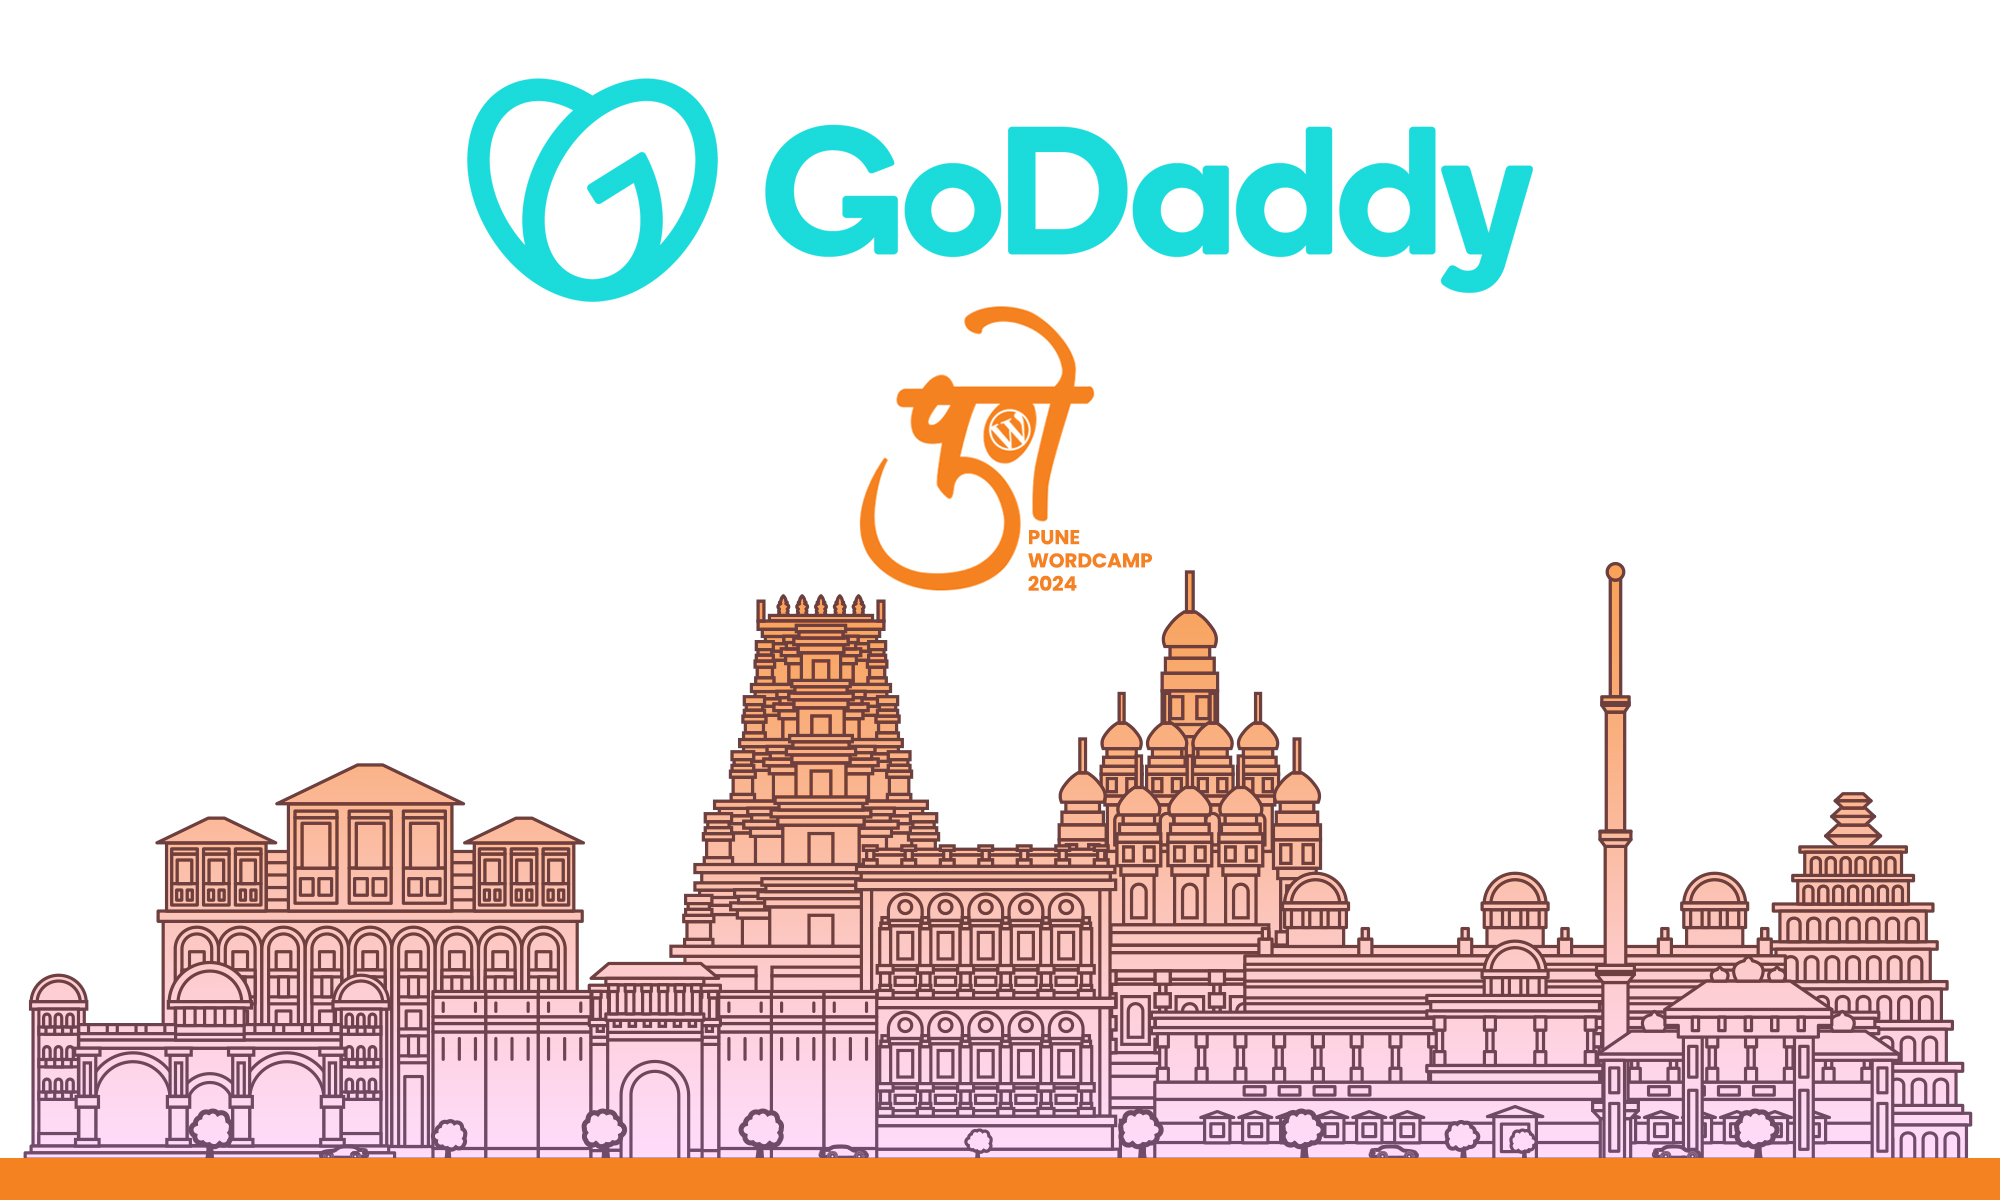 GoDaddy is a Gold Sponsor